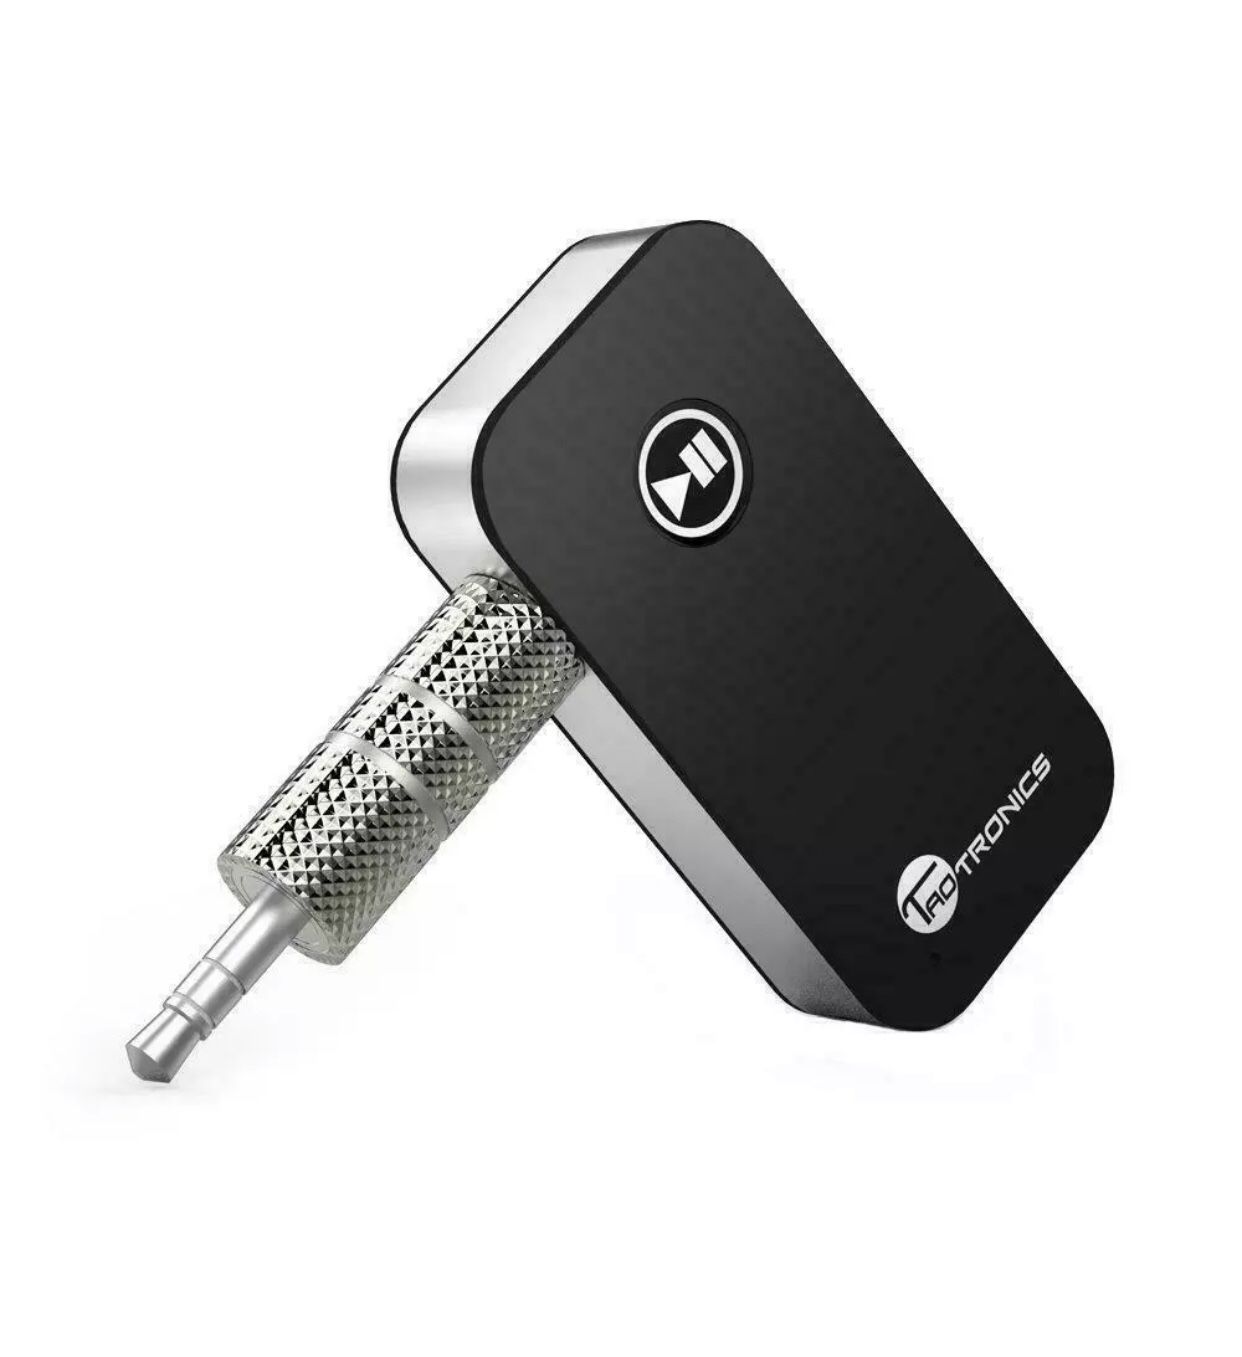 TaoTronics TT-BR05 Bluetooth Receiver / Car Kit, Portable Wireless Audio Adapter 3.5m